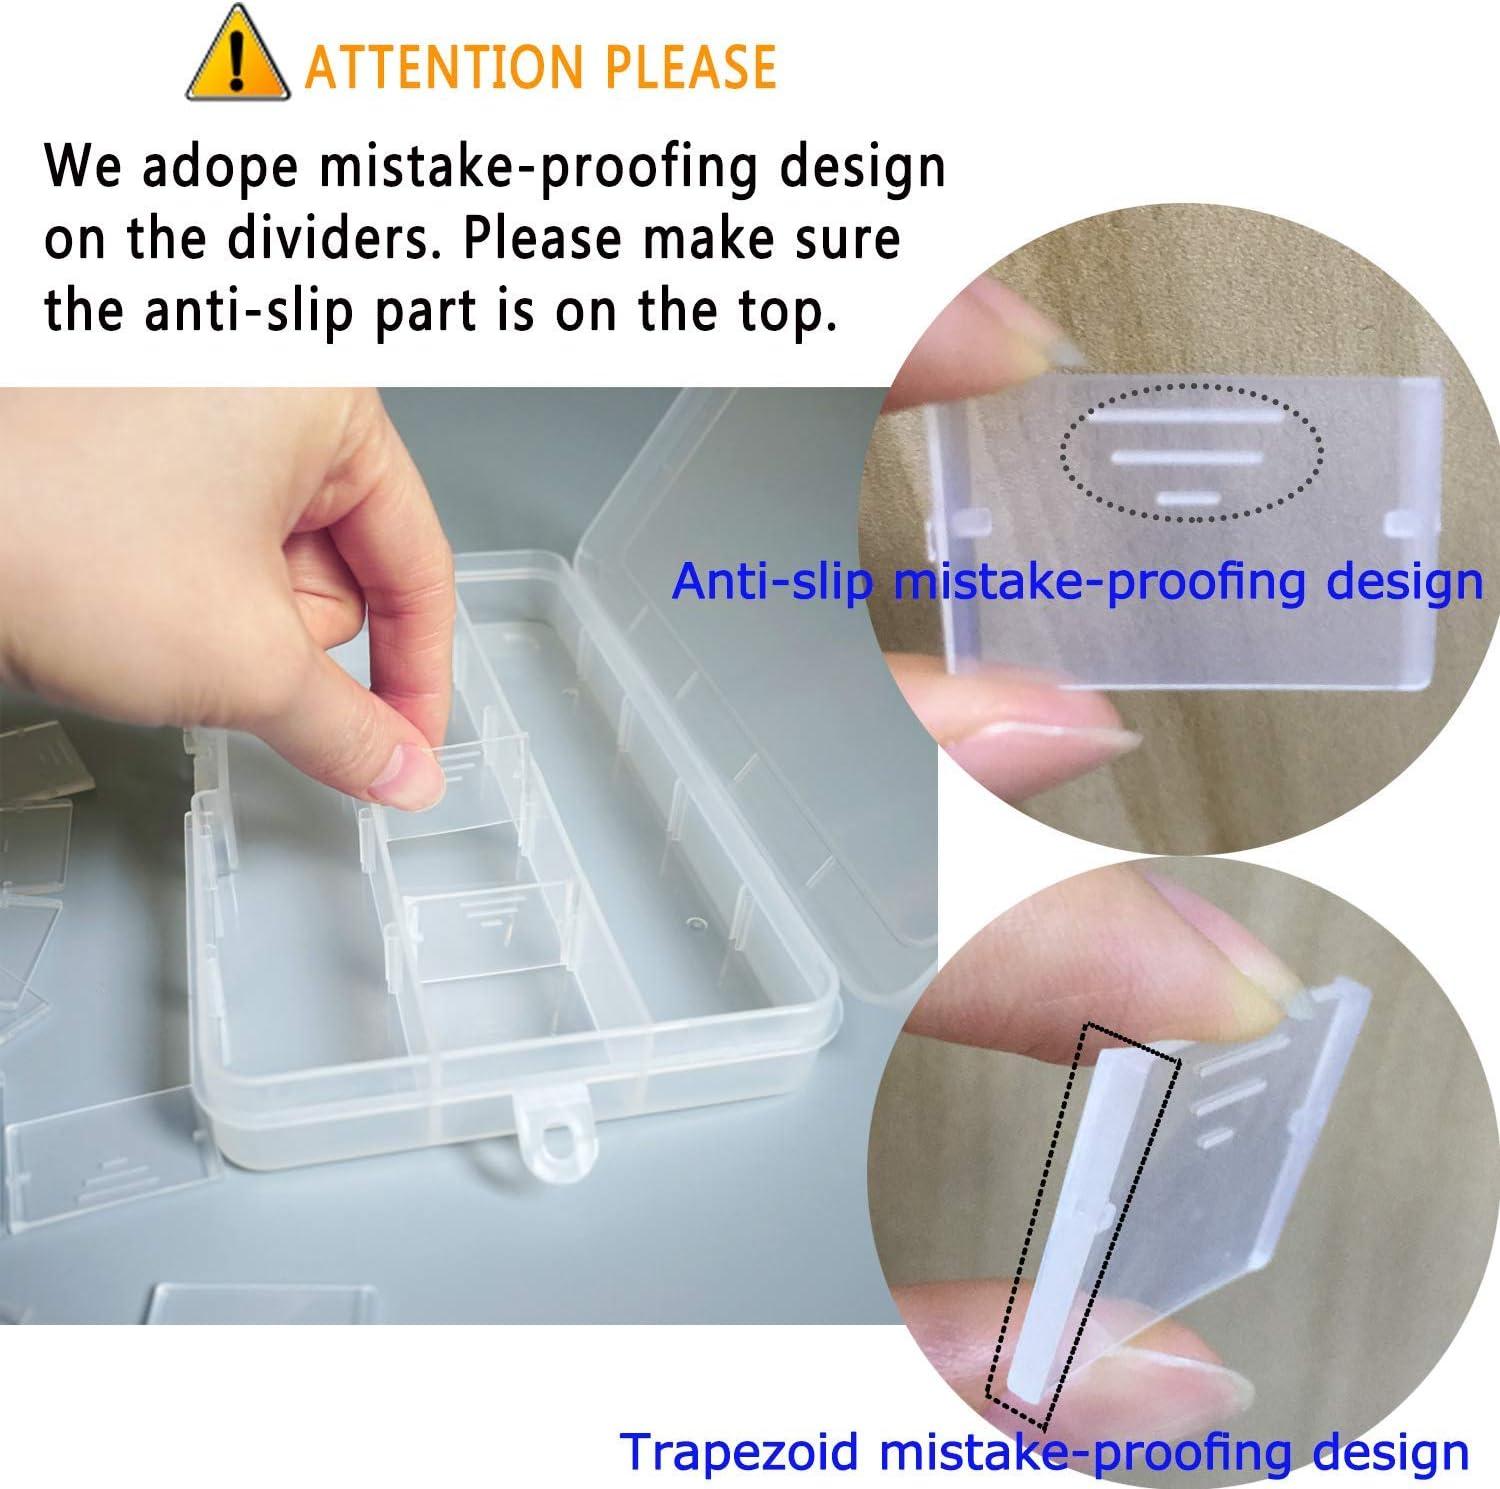 Plastic Organizer Container Storage Box Adjustable Divider